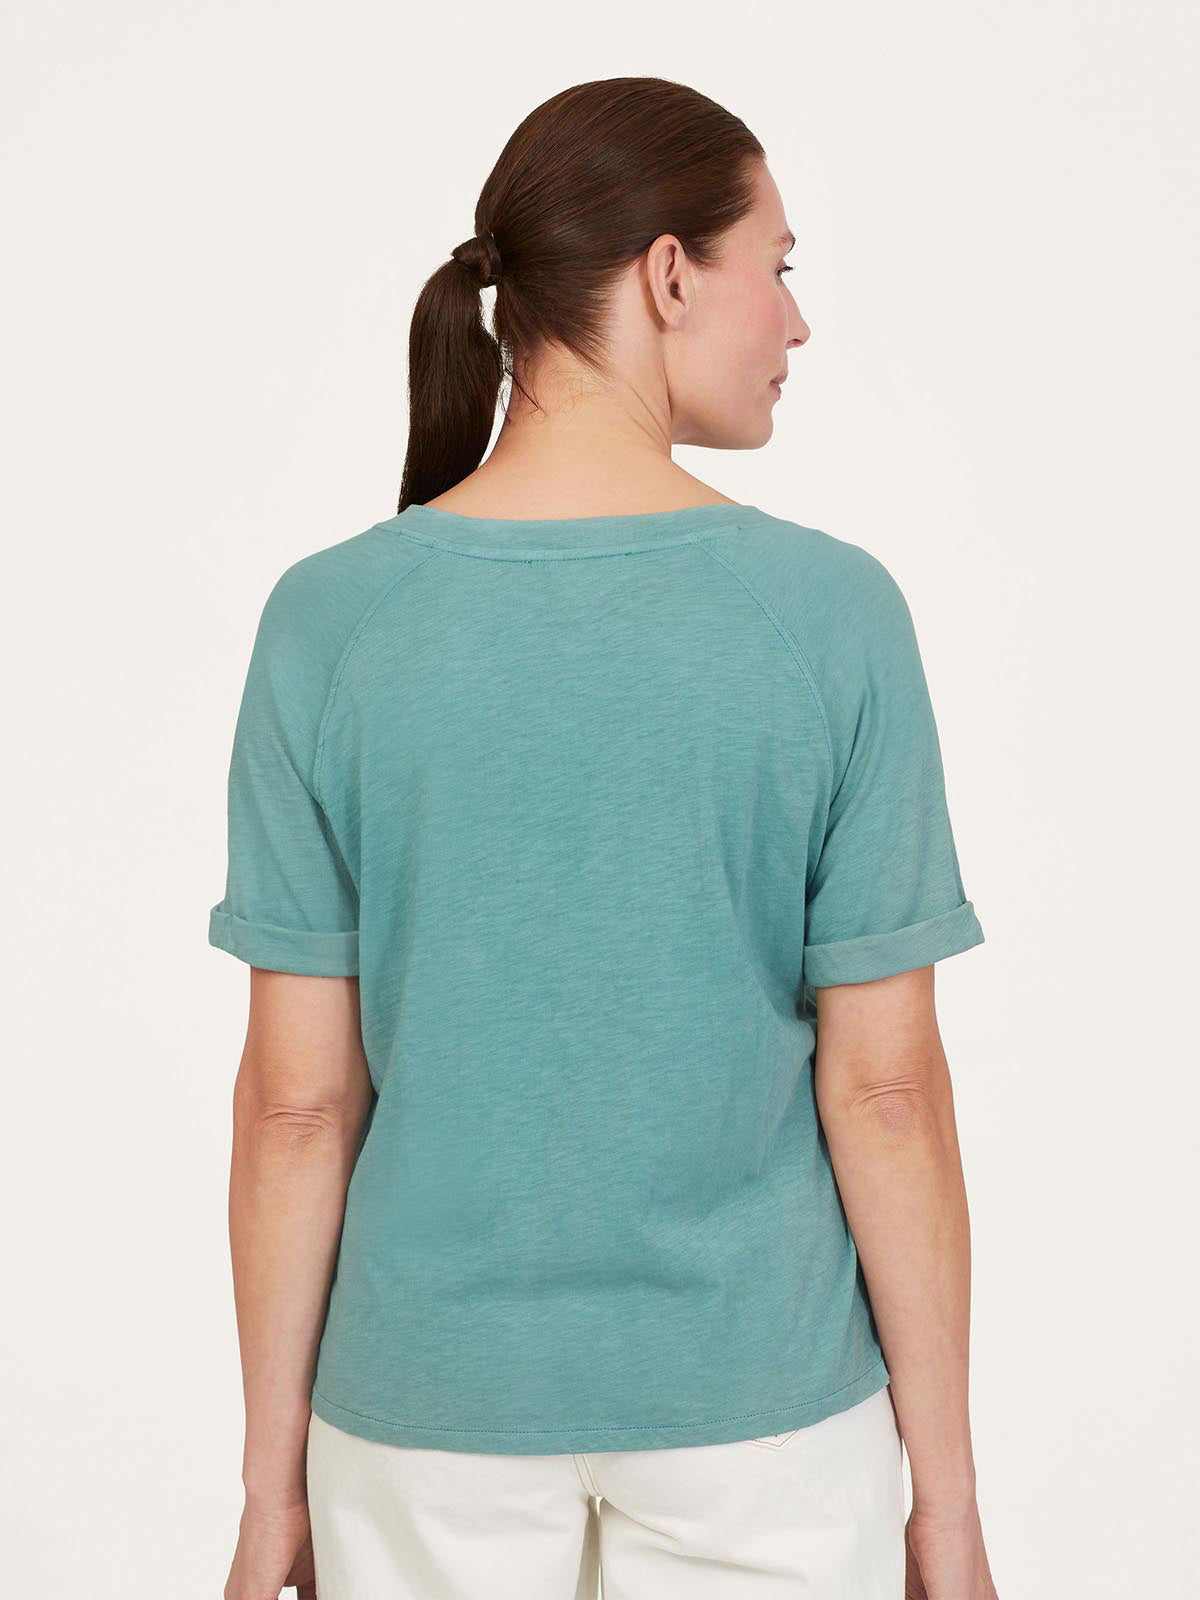 Fairtrade Organic Cotton Notch Neck T-Shirt - Lagoon Blue